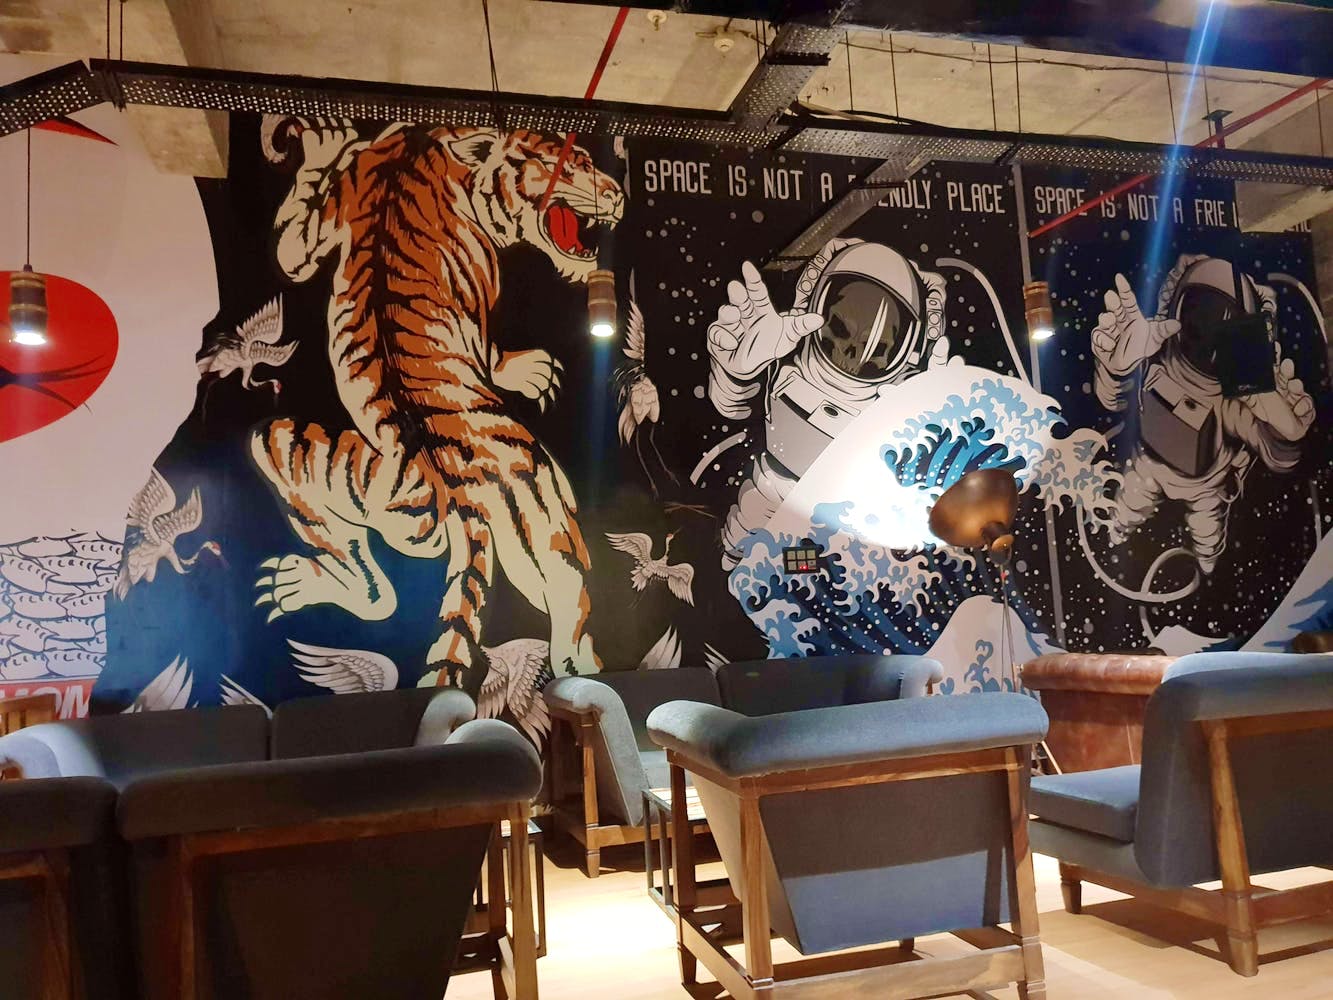 Wall,Room,Mural,Interior design,Tiger,Art,Design,Restaurant,Table,Felidae